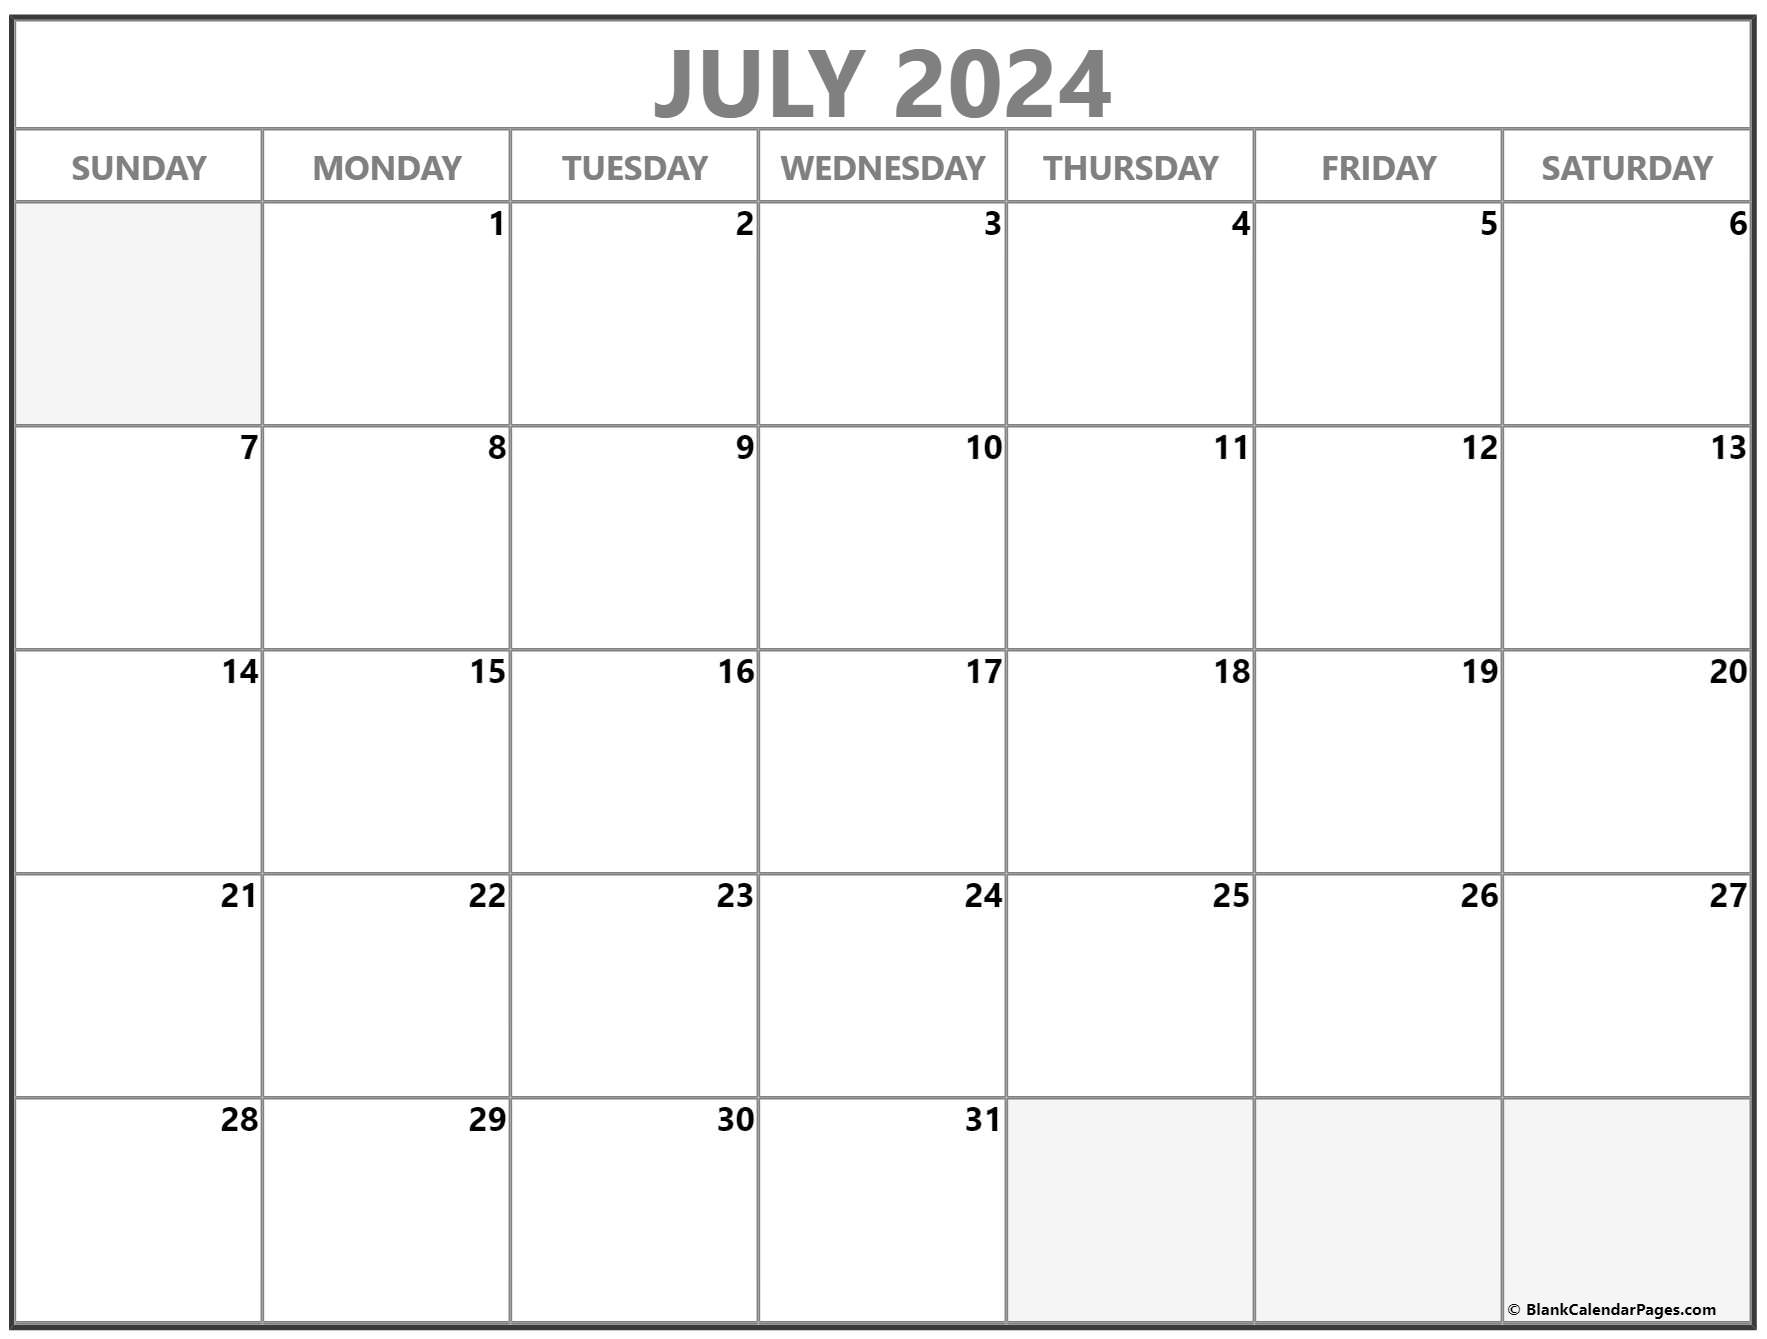 July 2024 Calendar | Free Printable Calendar | Calendar Pages July 2024